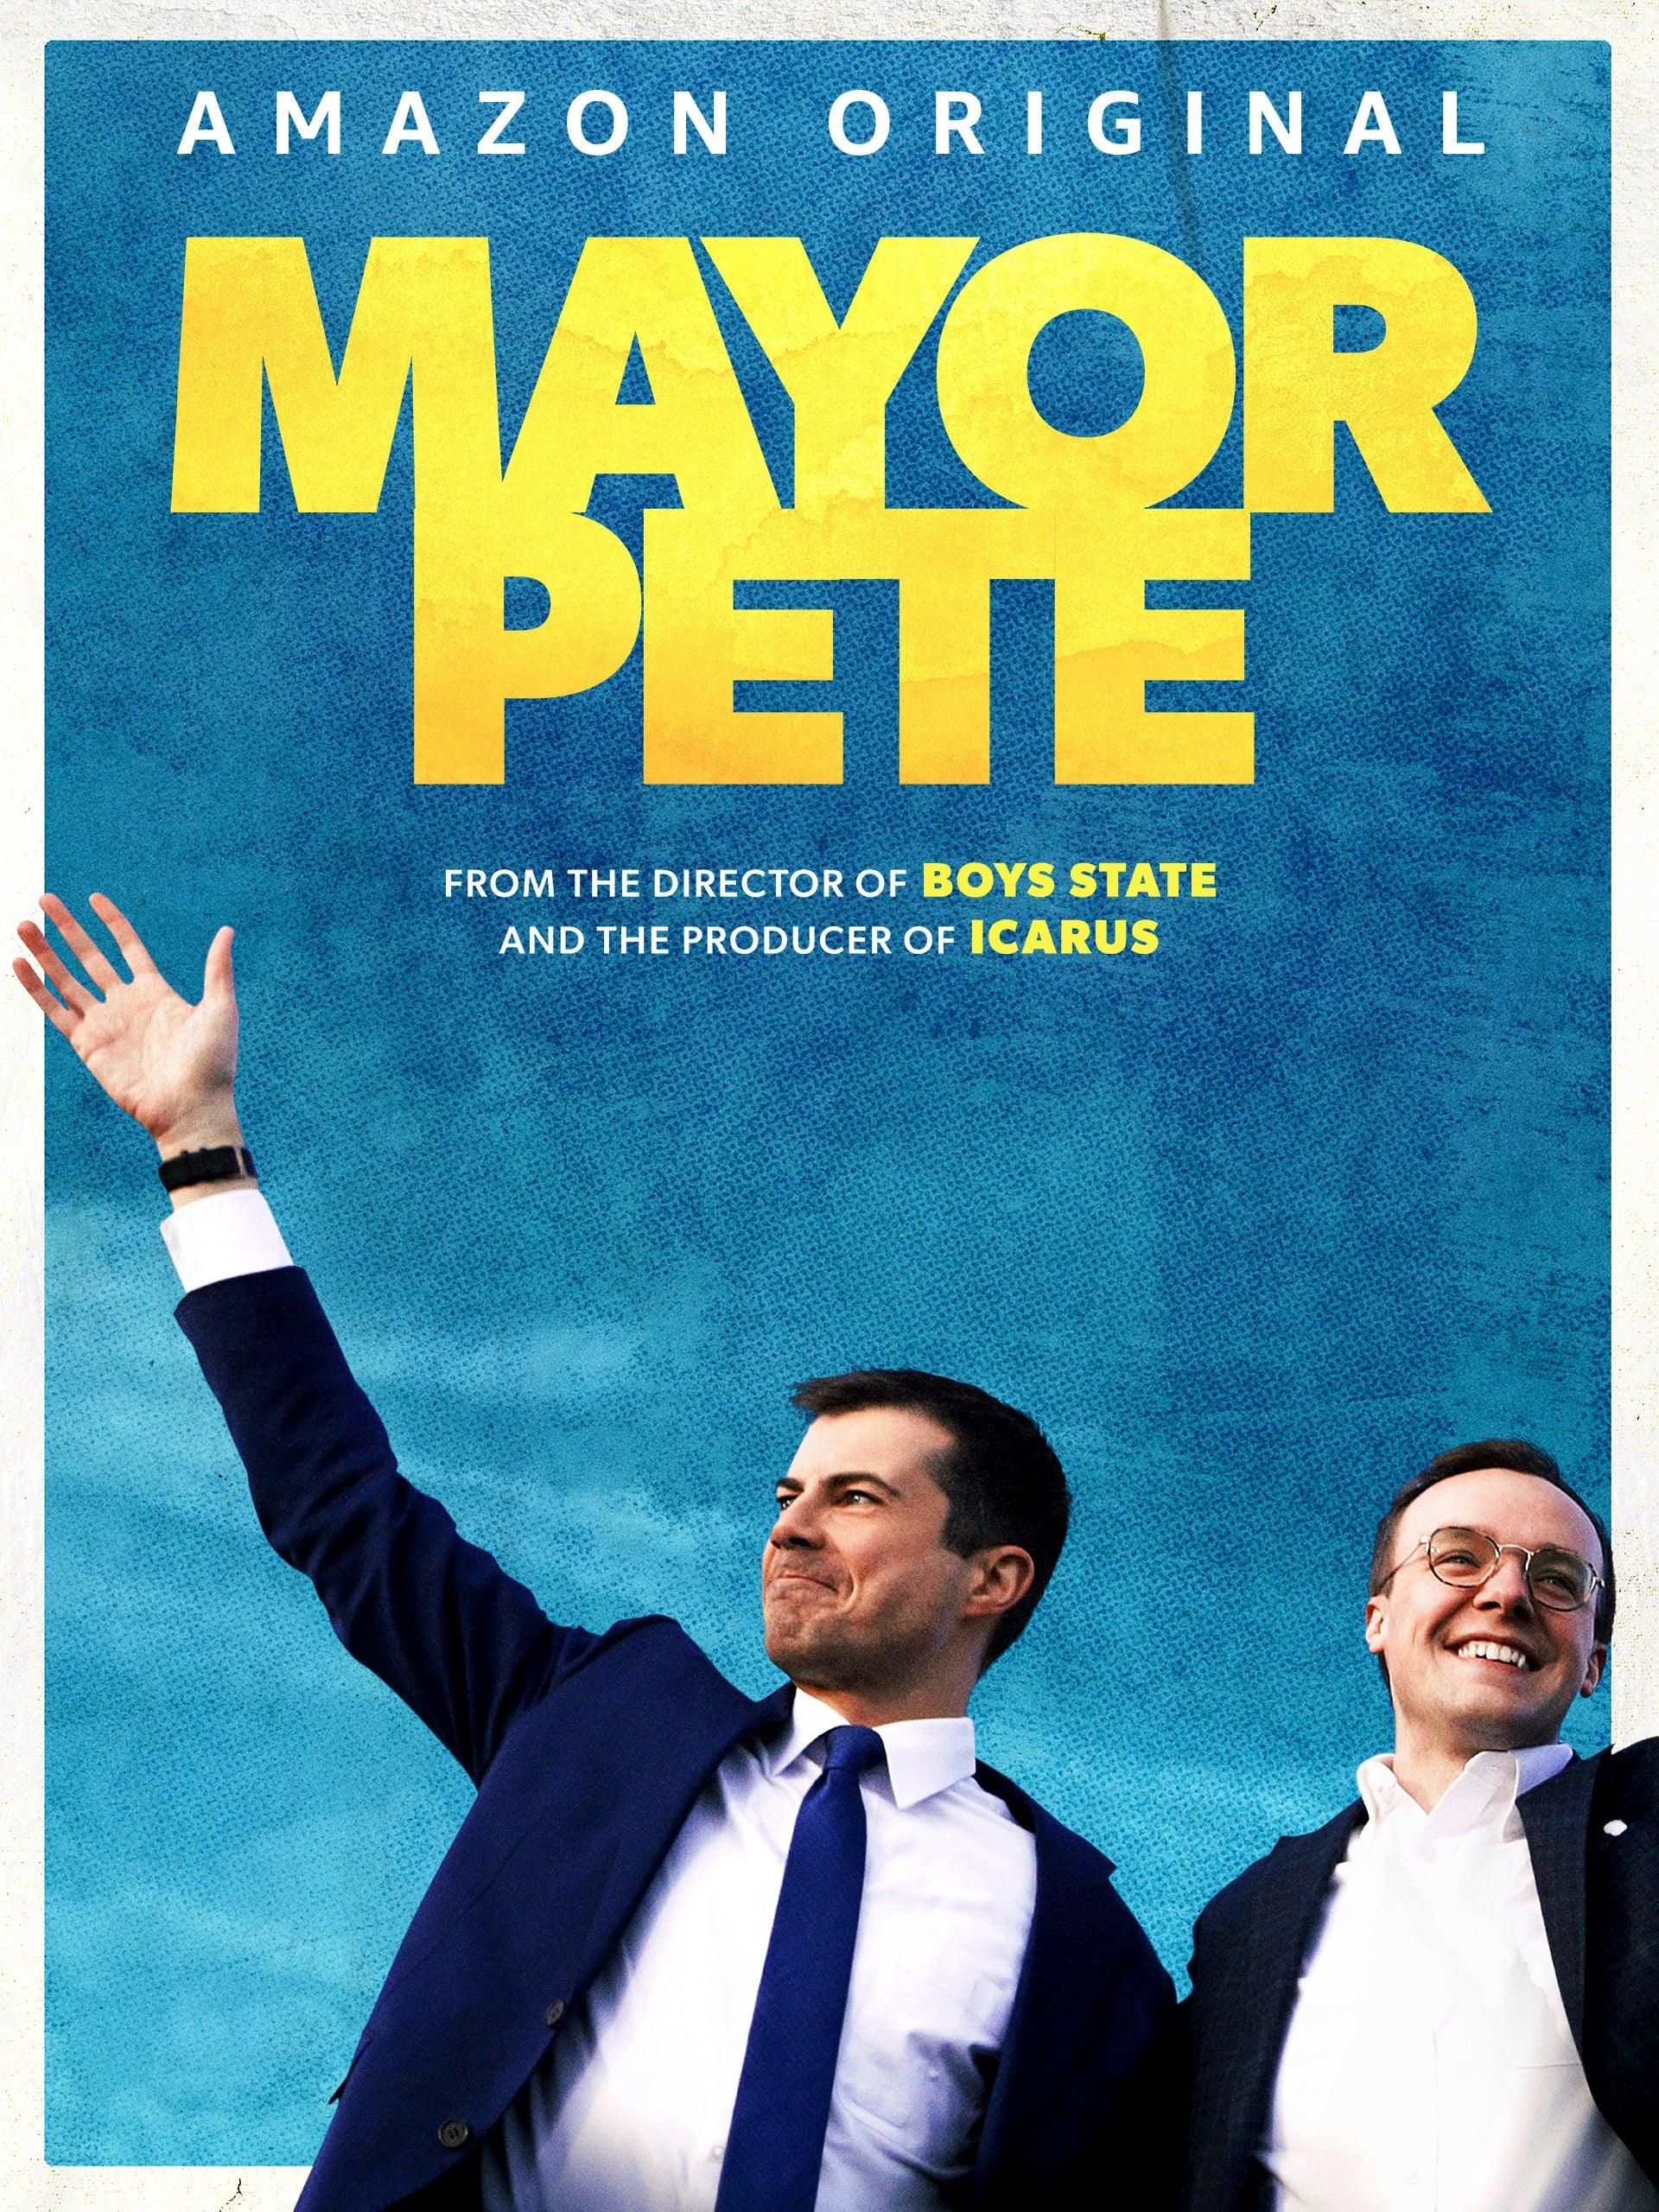 Mayor Pete poster